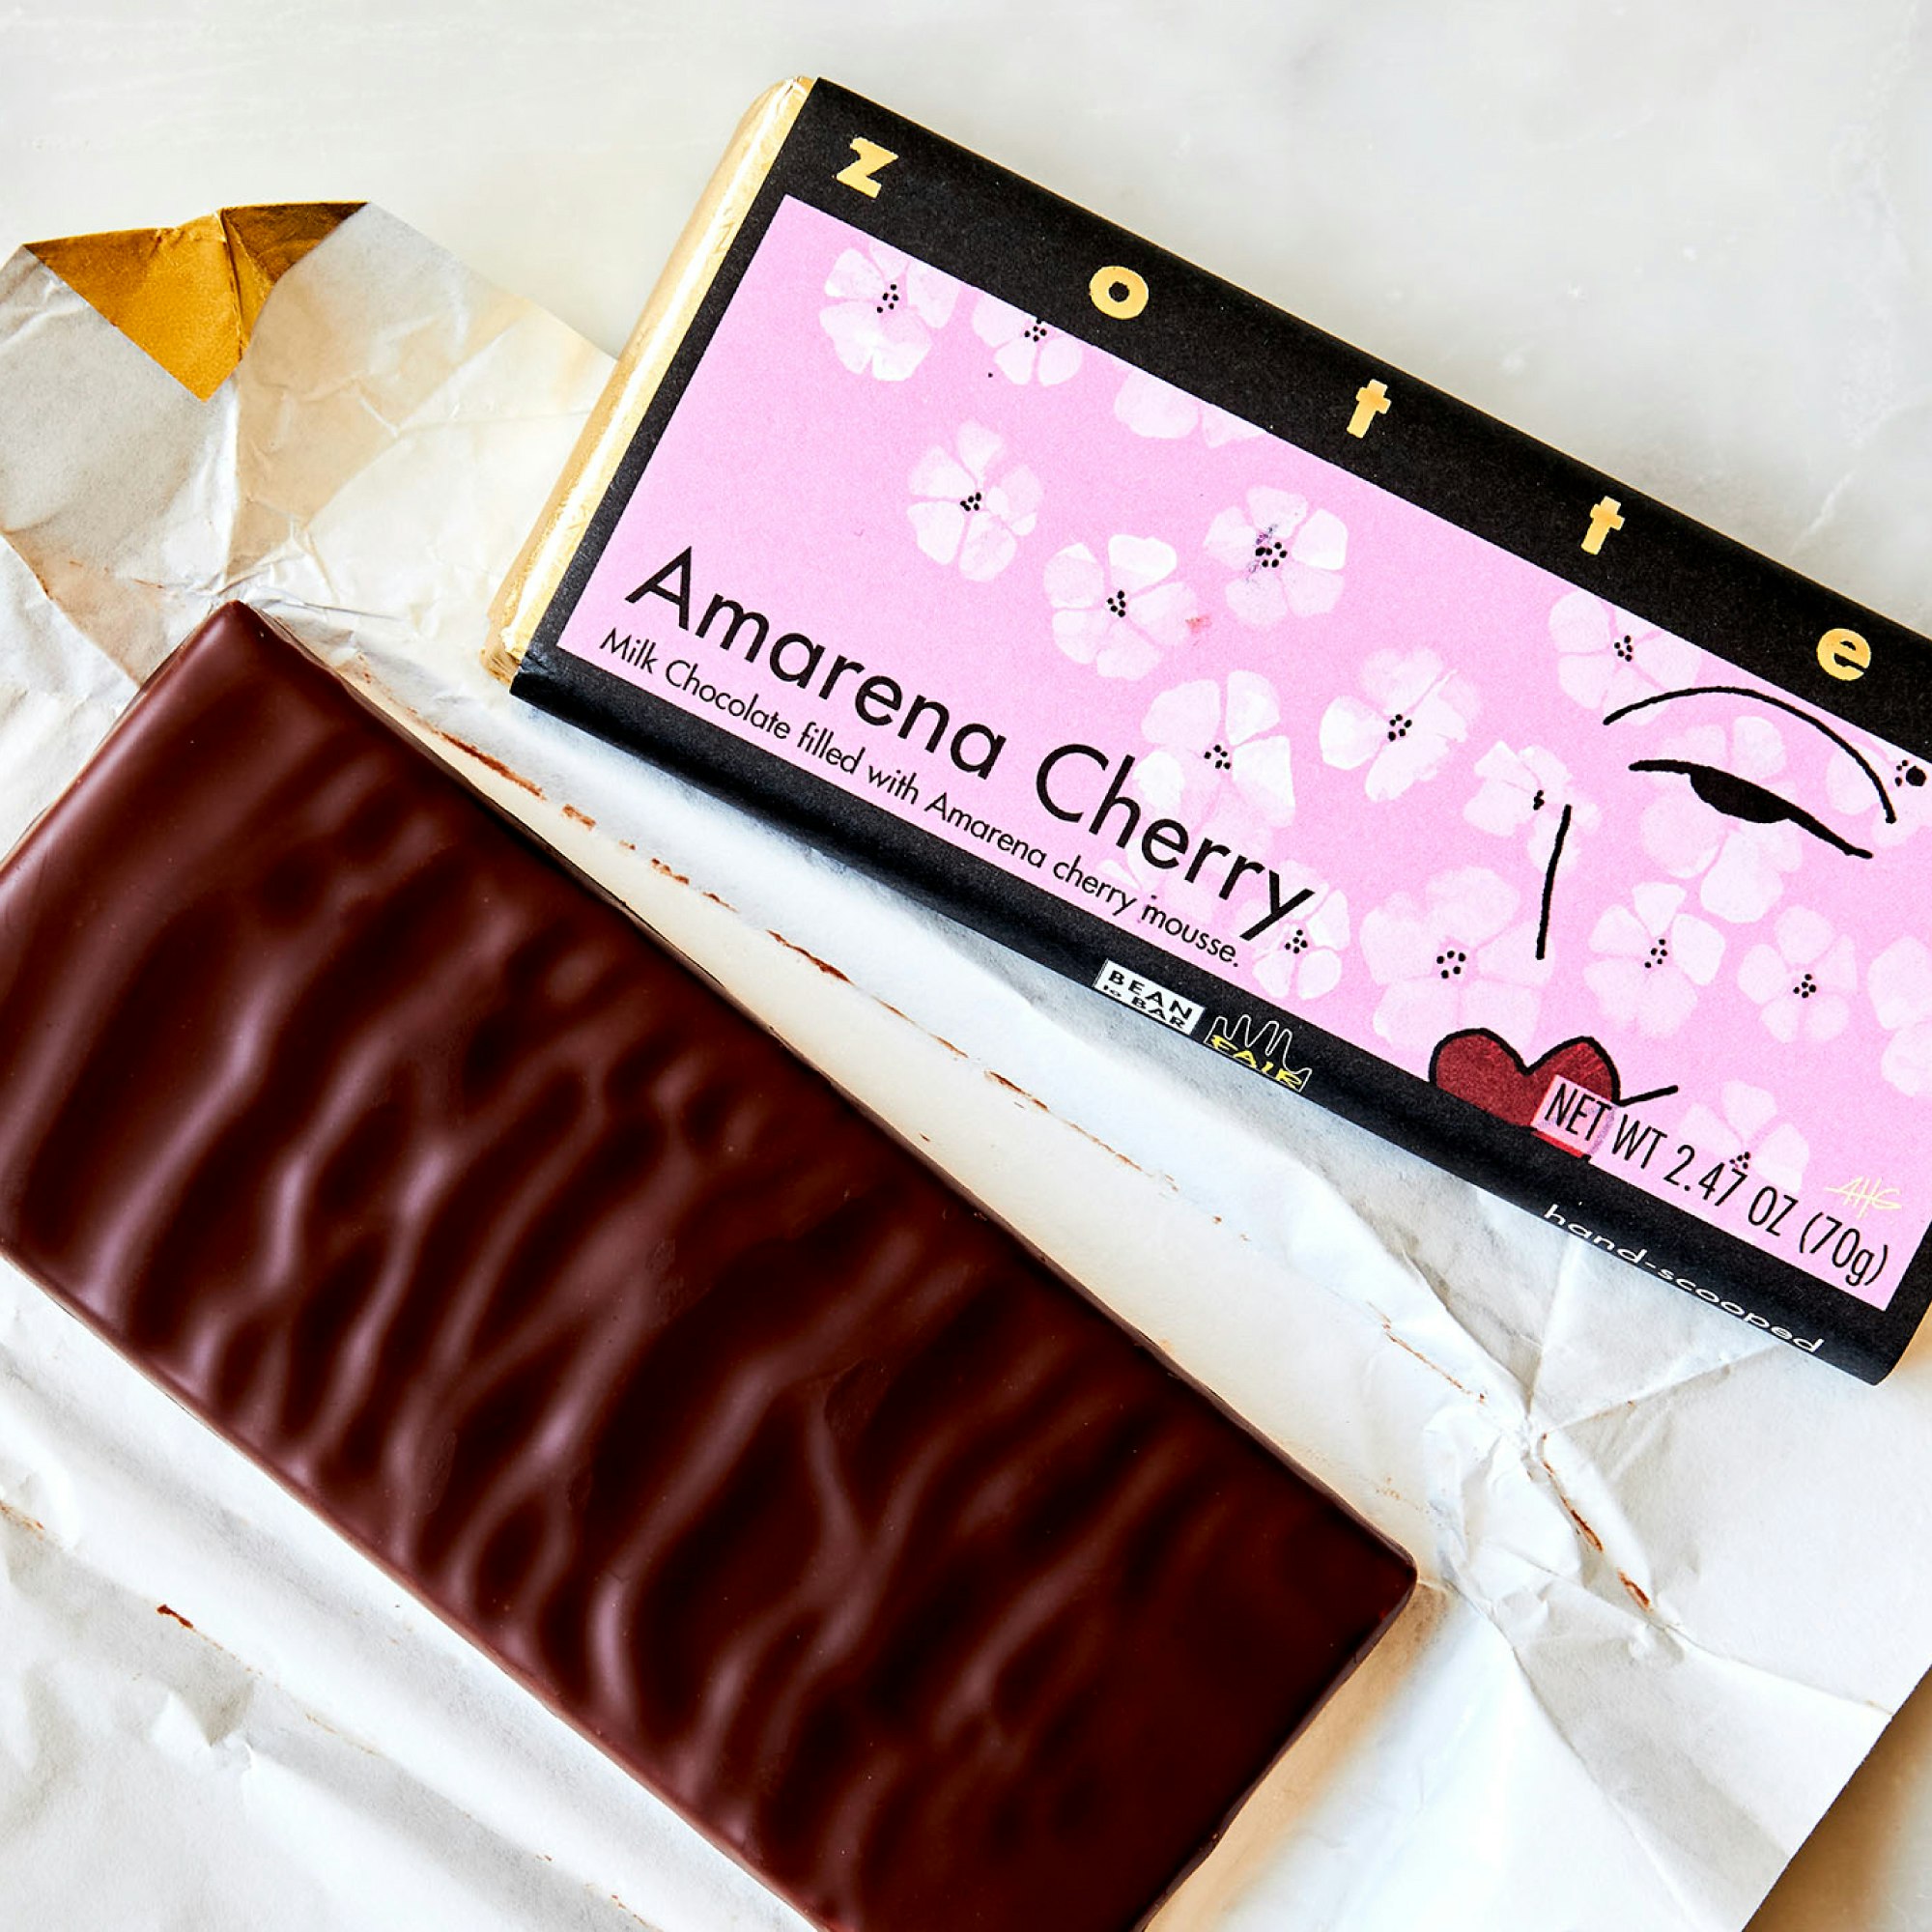 zotter chocolates amarena cherry specialty foods